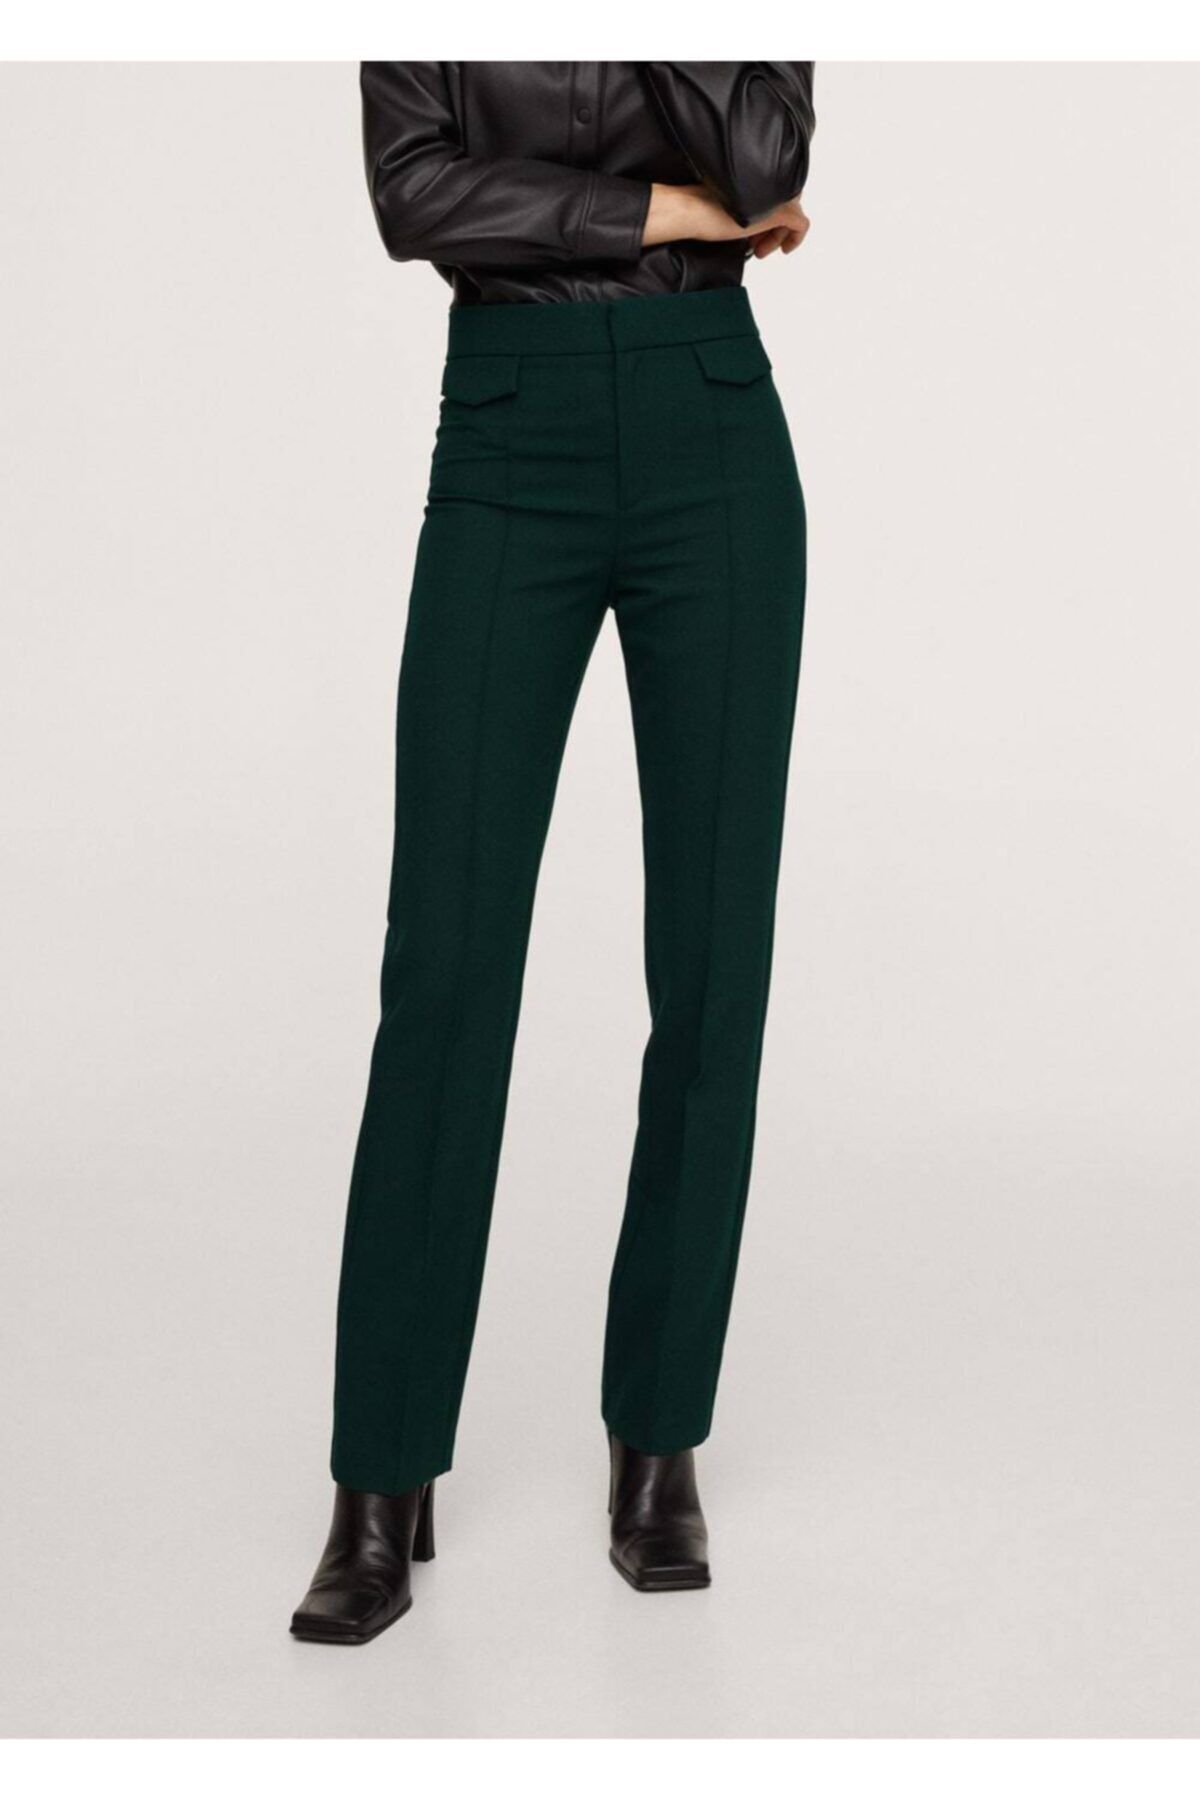 MANGO Kadın Yeşil Düz Kesim Dikişli Pantolon